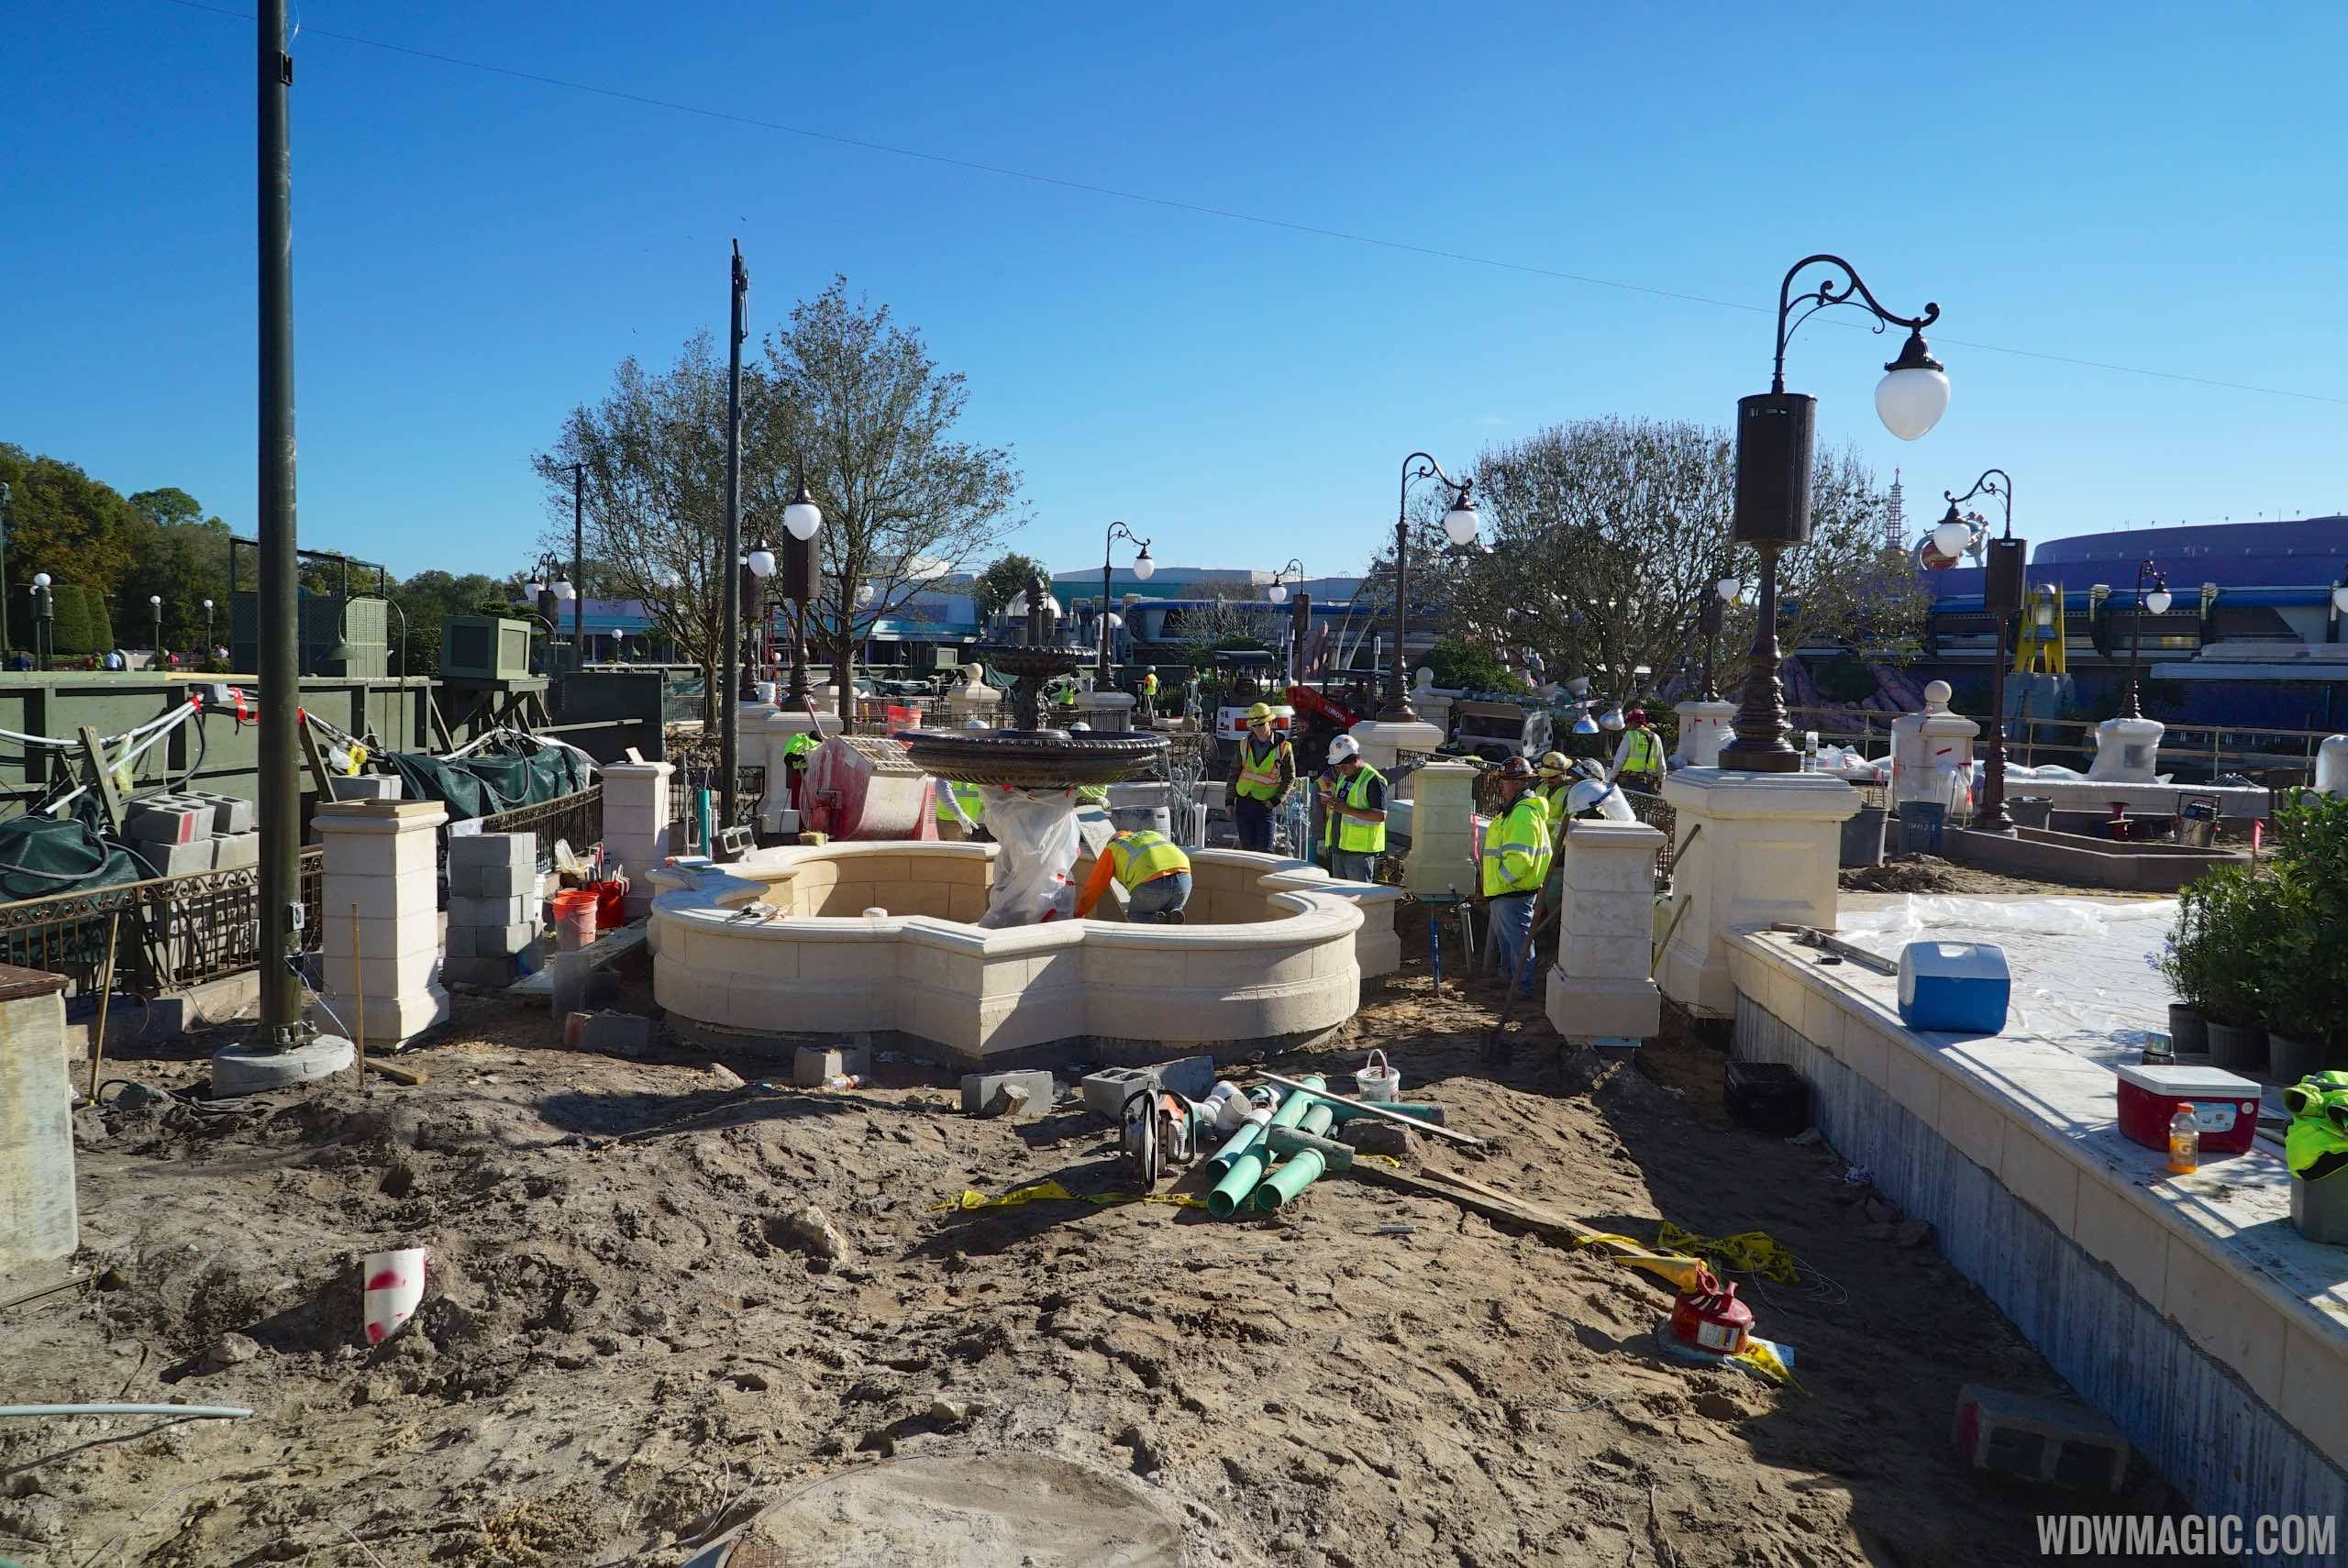 PHOTOS - Some construction walls down around the new Main Street Plaza Gardens at the Magic Kingdom